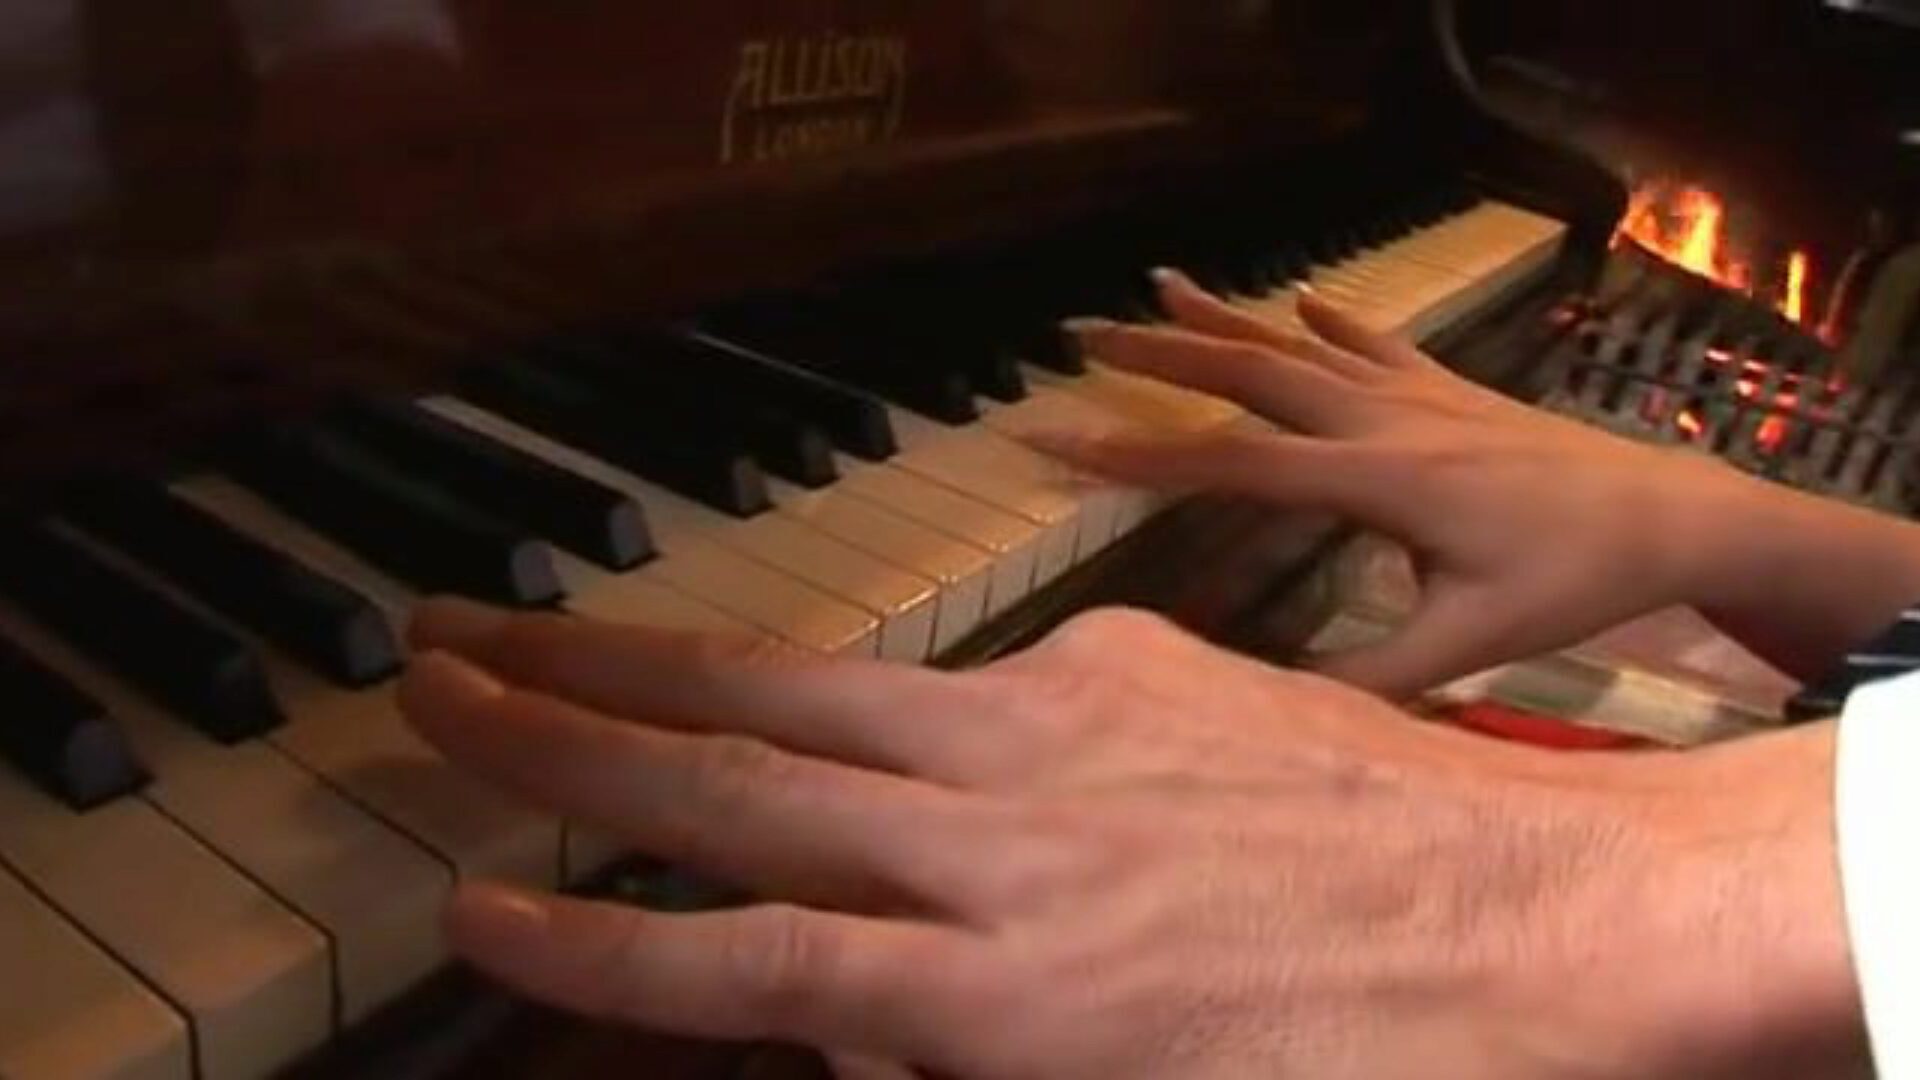 müzik dersi piyano dersi